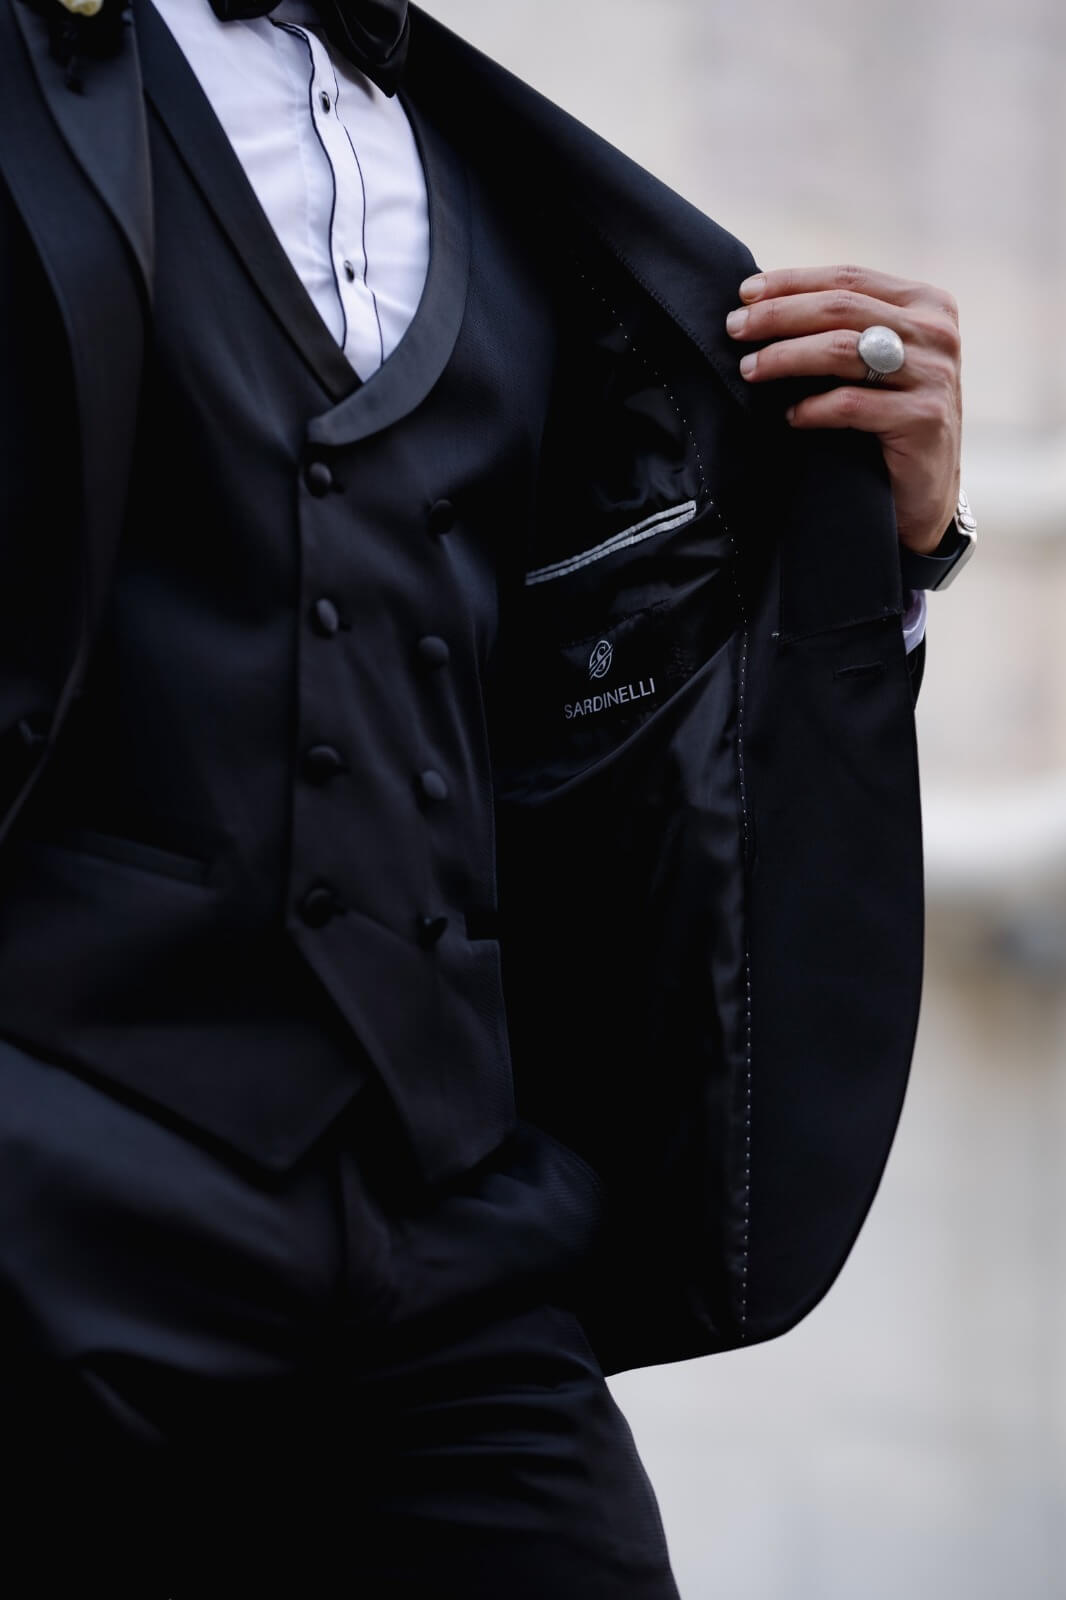 A Slim Fit Black Tuxedo Suit on display.